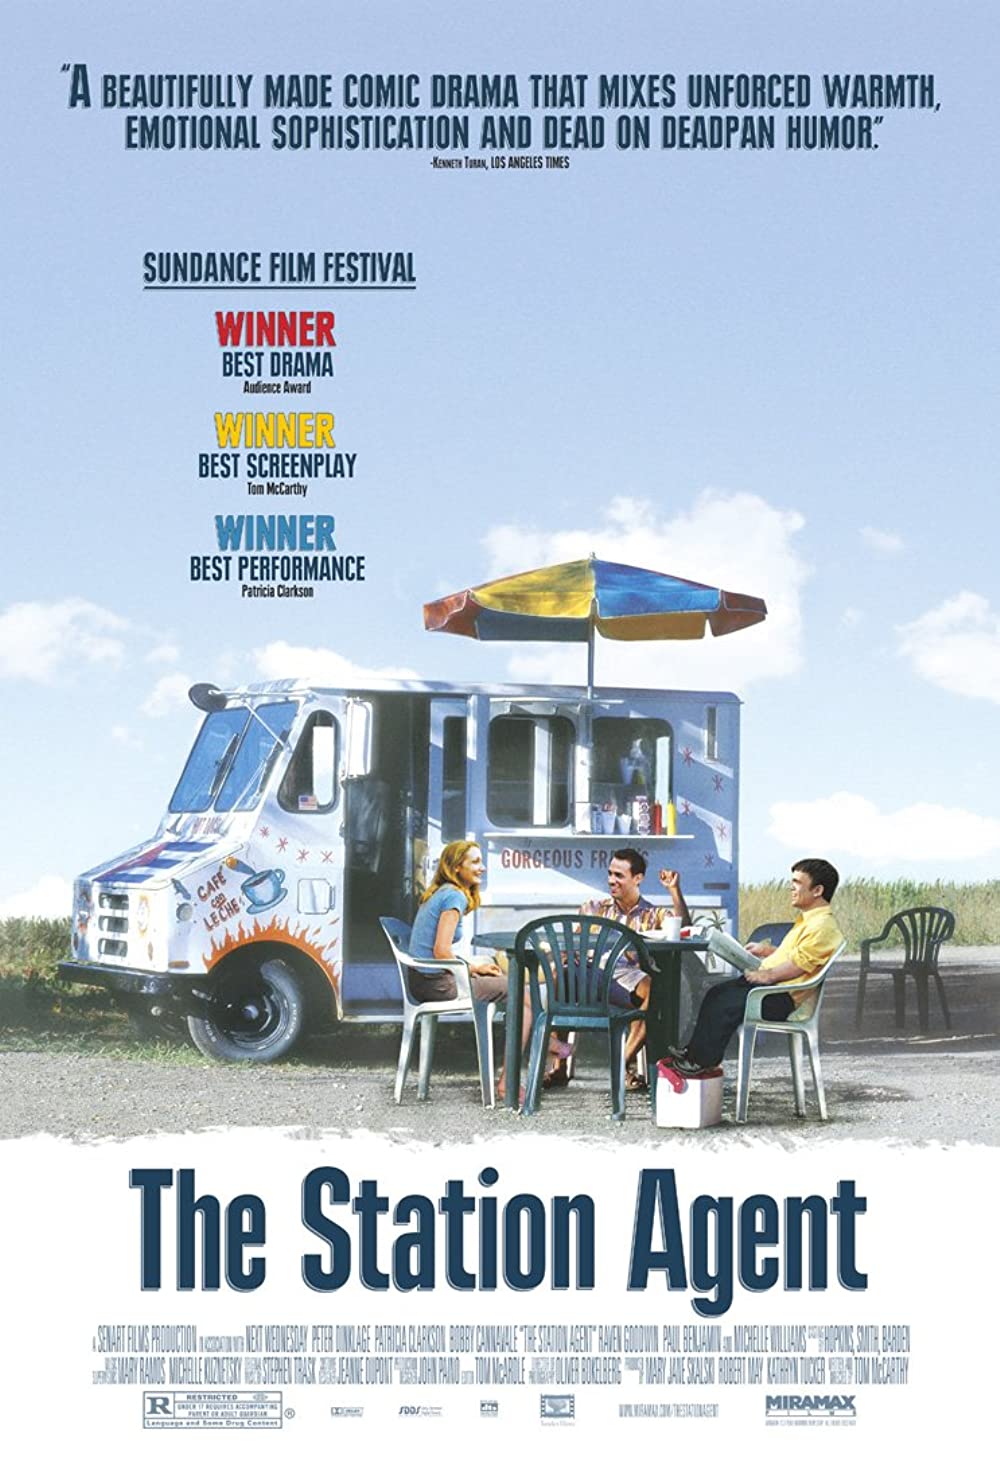 Filmbeschreibung zu The Station Agent